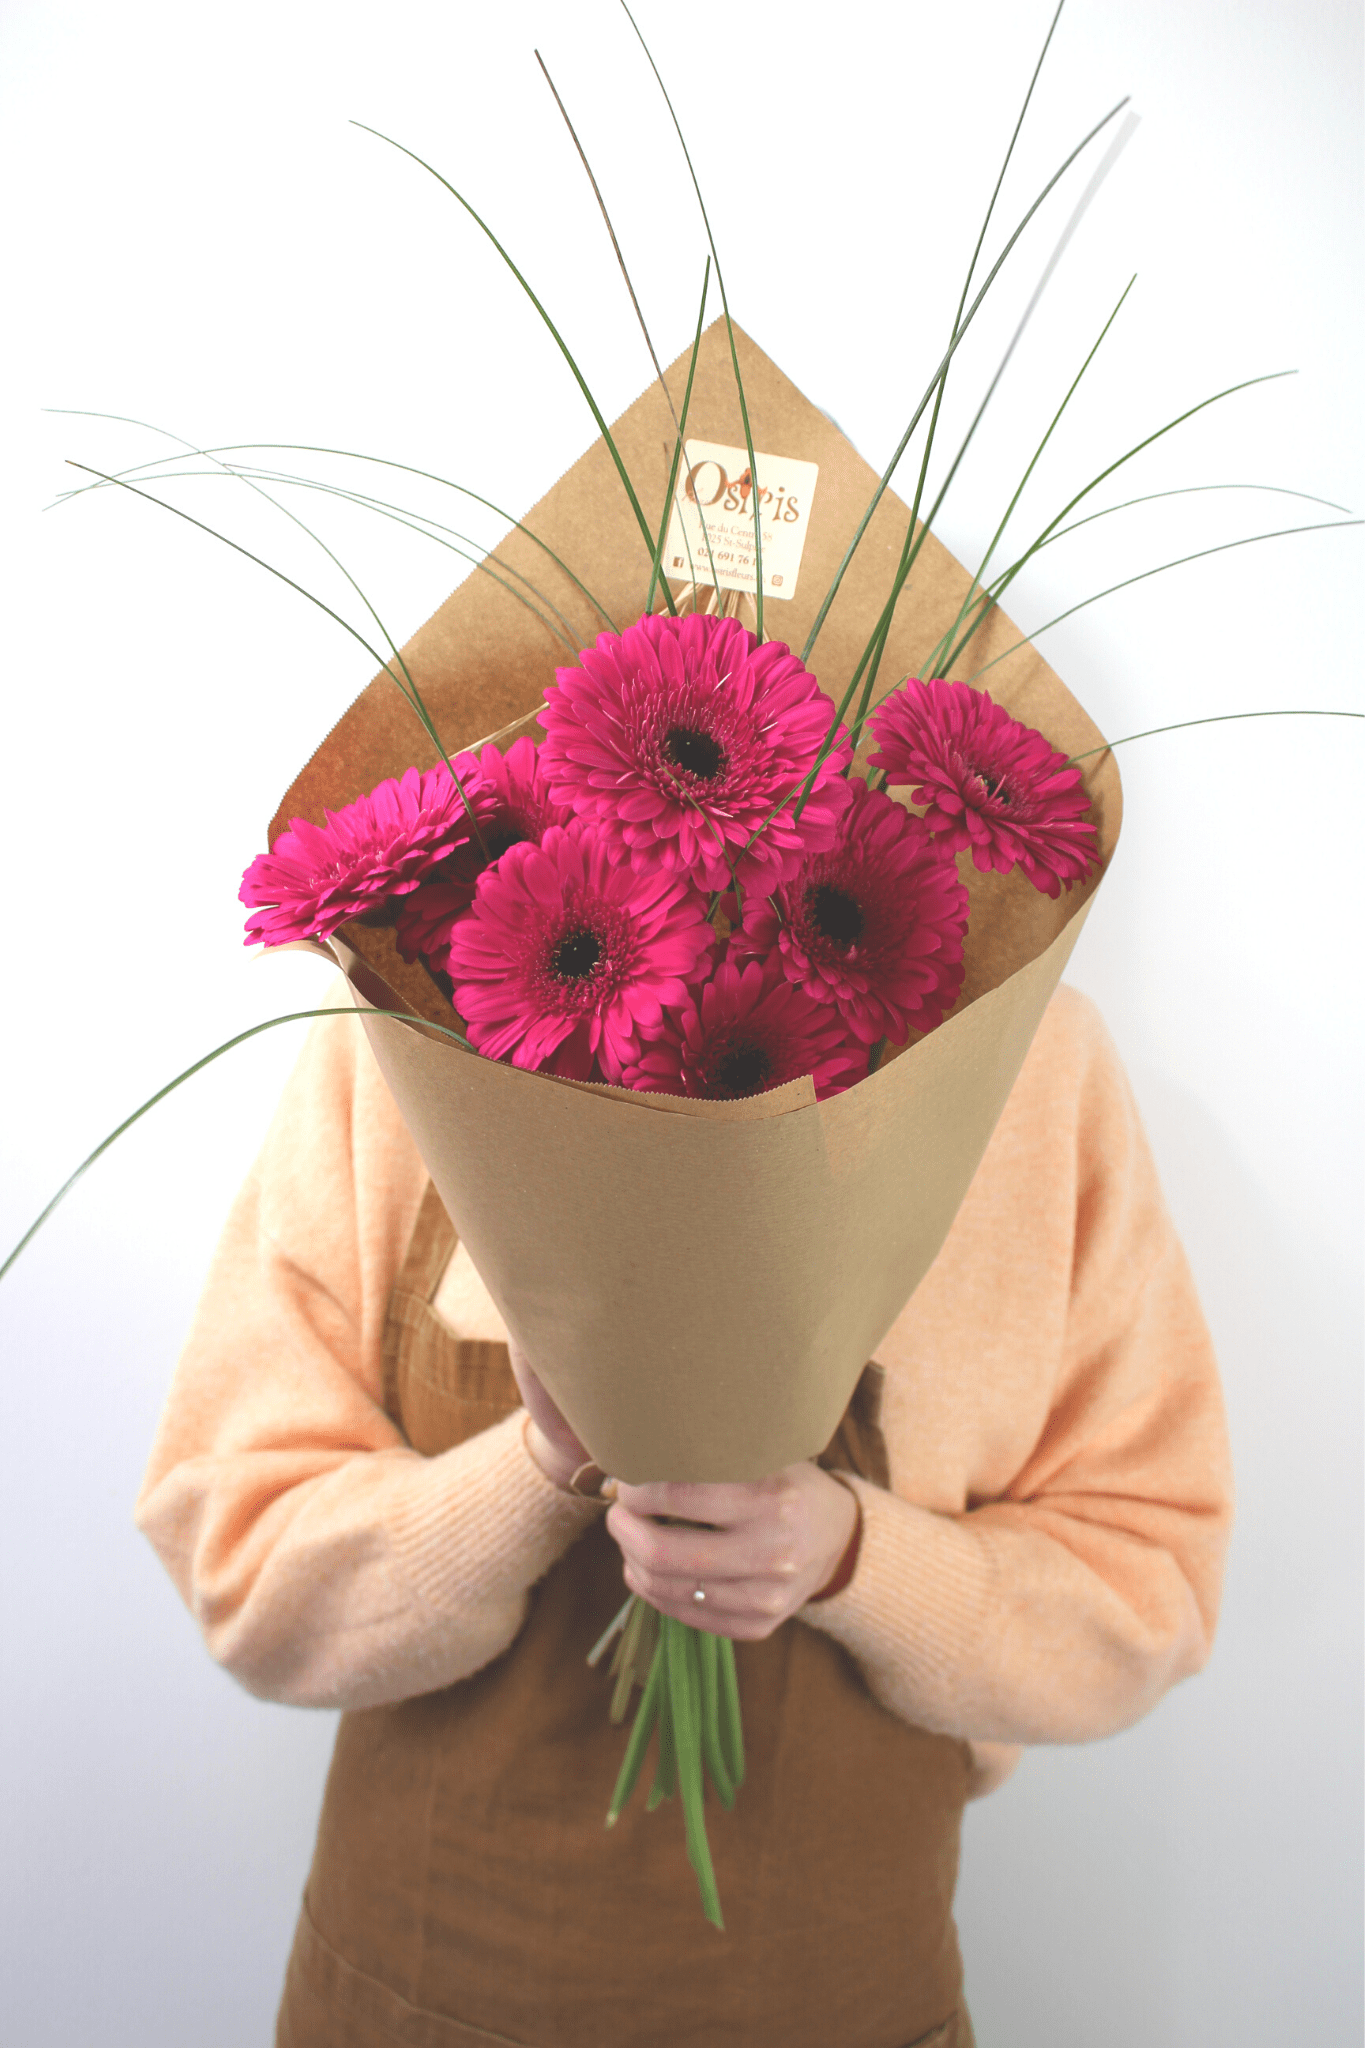 Annual Bouquet - Colorful Gerberas